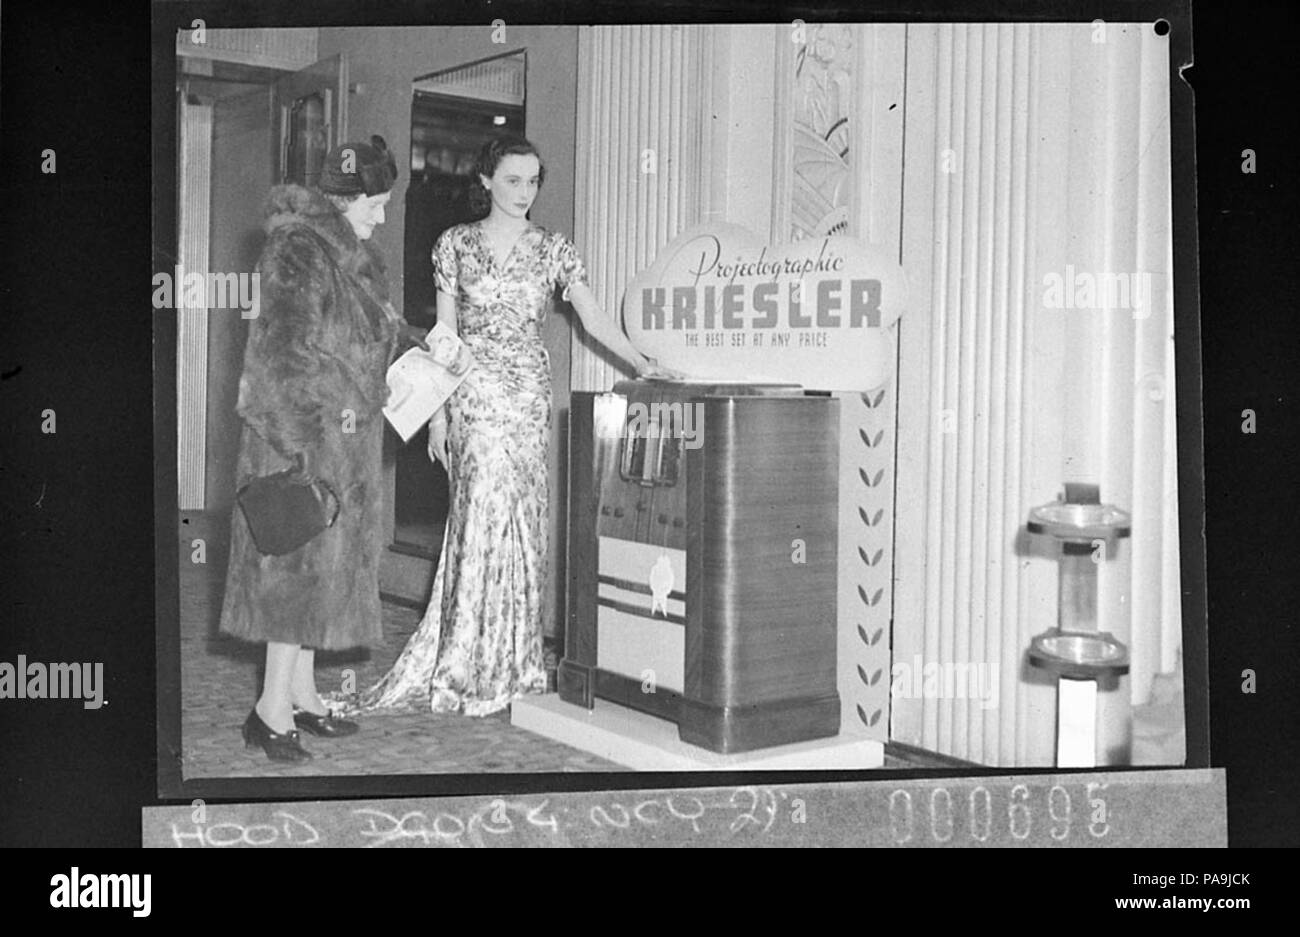 237 SLNSW 11656 Kriesler radio display at Embassy Theatre for Radio Retailer Usherette demonstrates Projectographic Kriesler radio Stock Photo